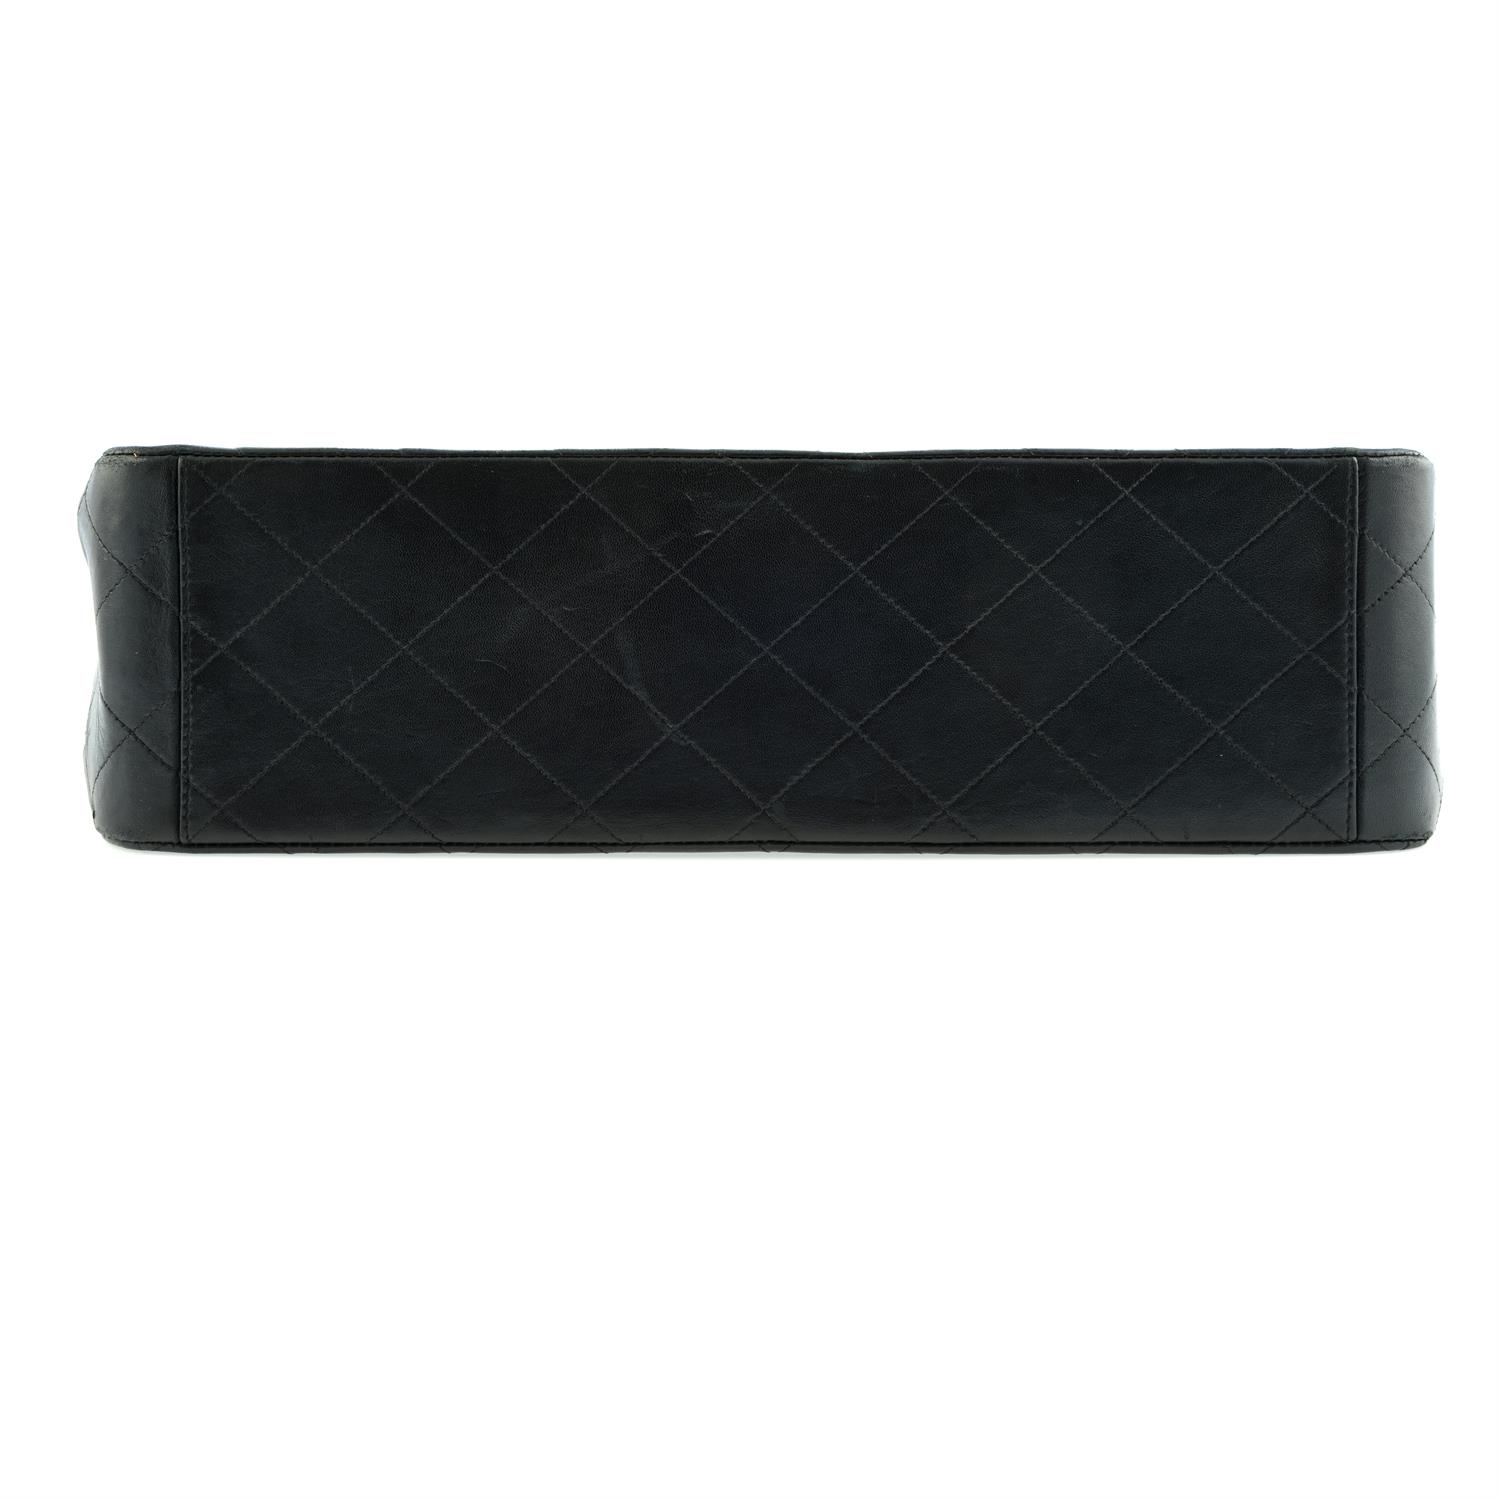 Chanel - Maxi Single Flap. - Image 4 of 4